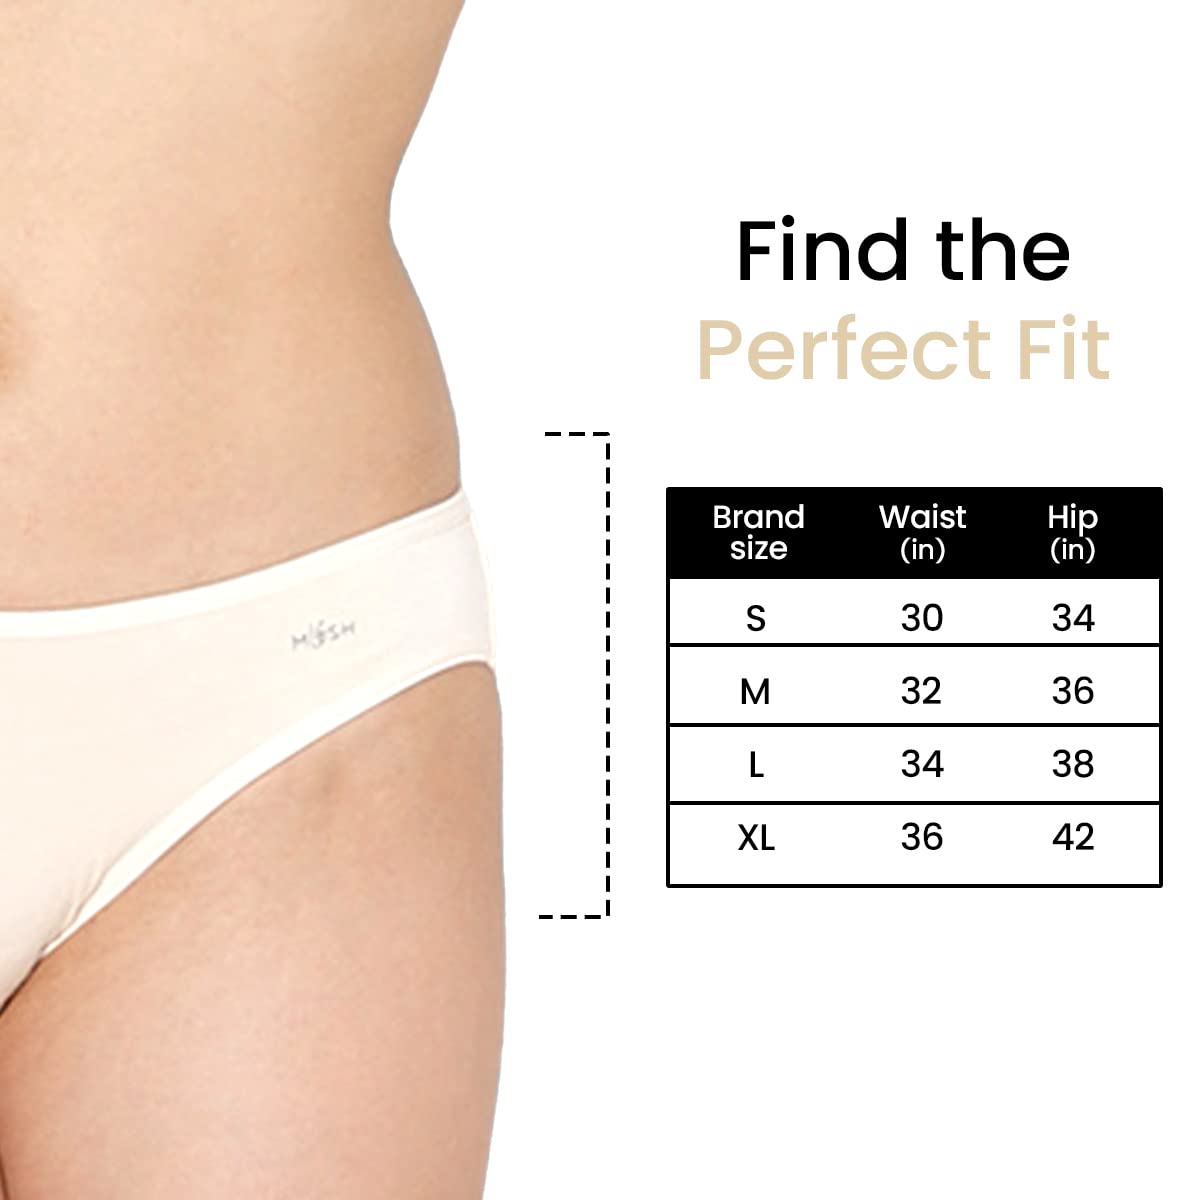 Mush Womens Ultra Soft Bamboo Modal Bikini Brief || Breathable Panties || Anti-Odor, Seamless, Anti Microbial Innerwear (M- Pack of 3, Beige Color)